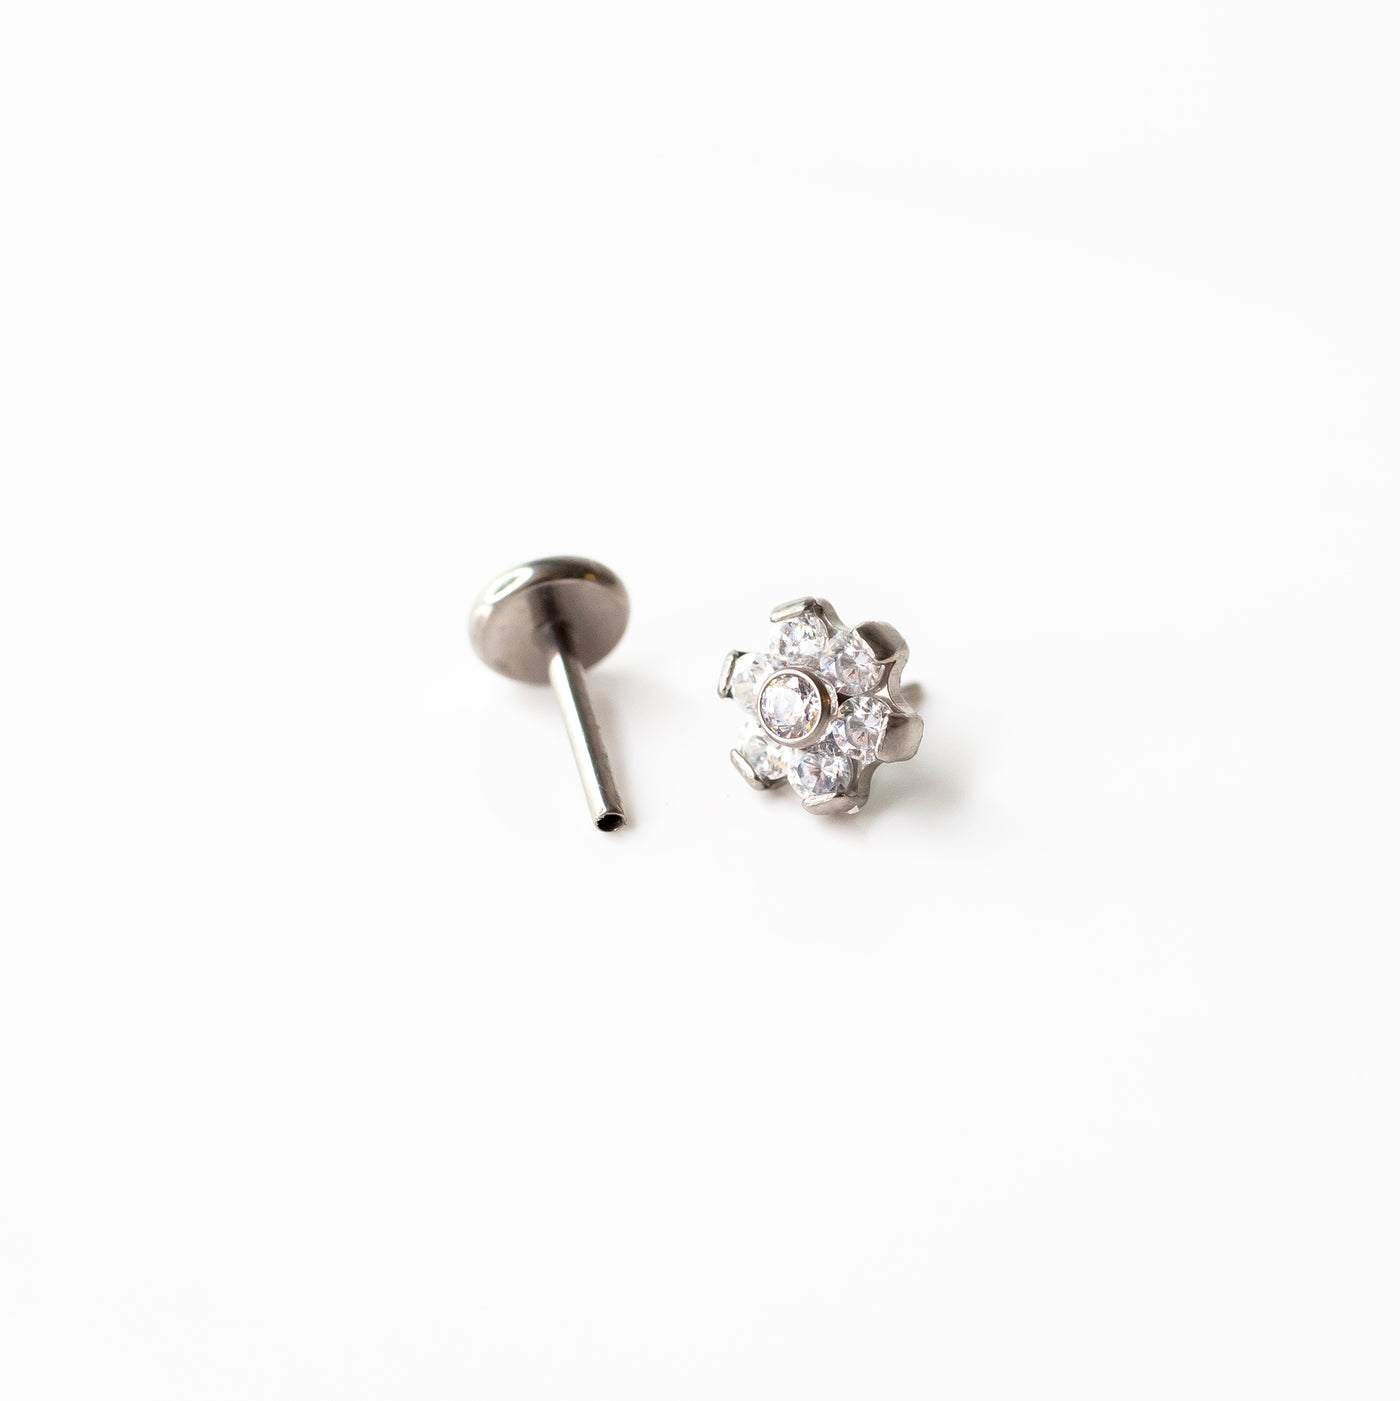 Aster Crystal Flower Flat Back Sleeper Earrings - Seven Stones